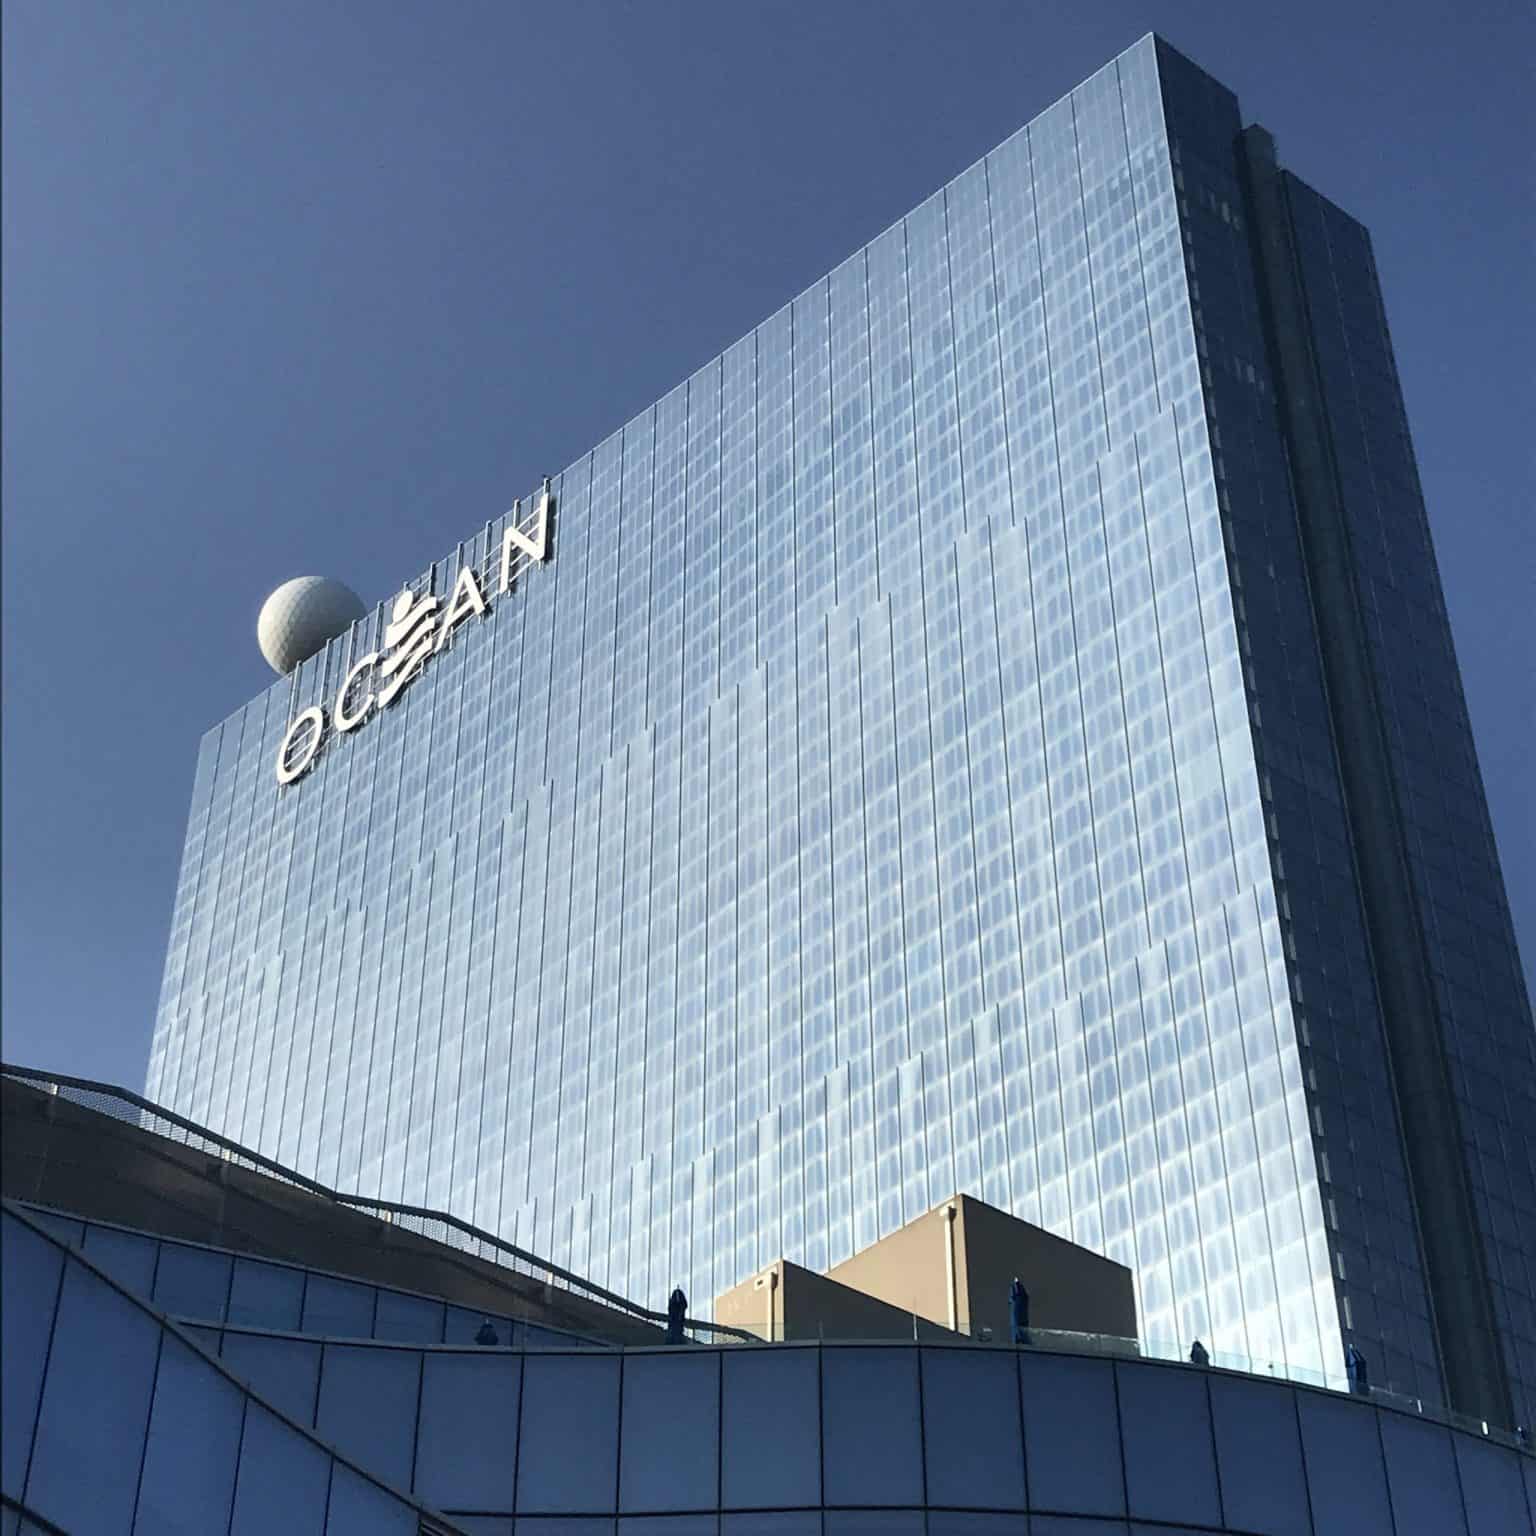 ocean hotel and casino atlantic city